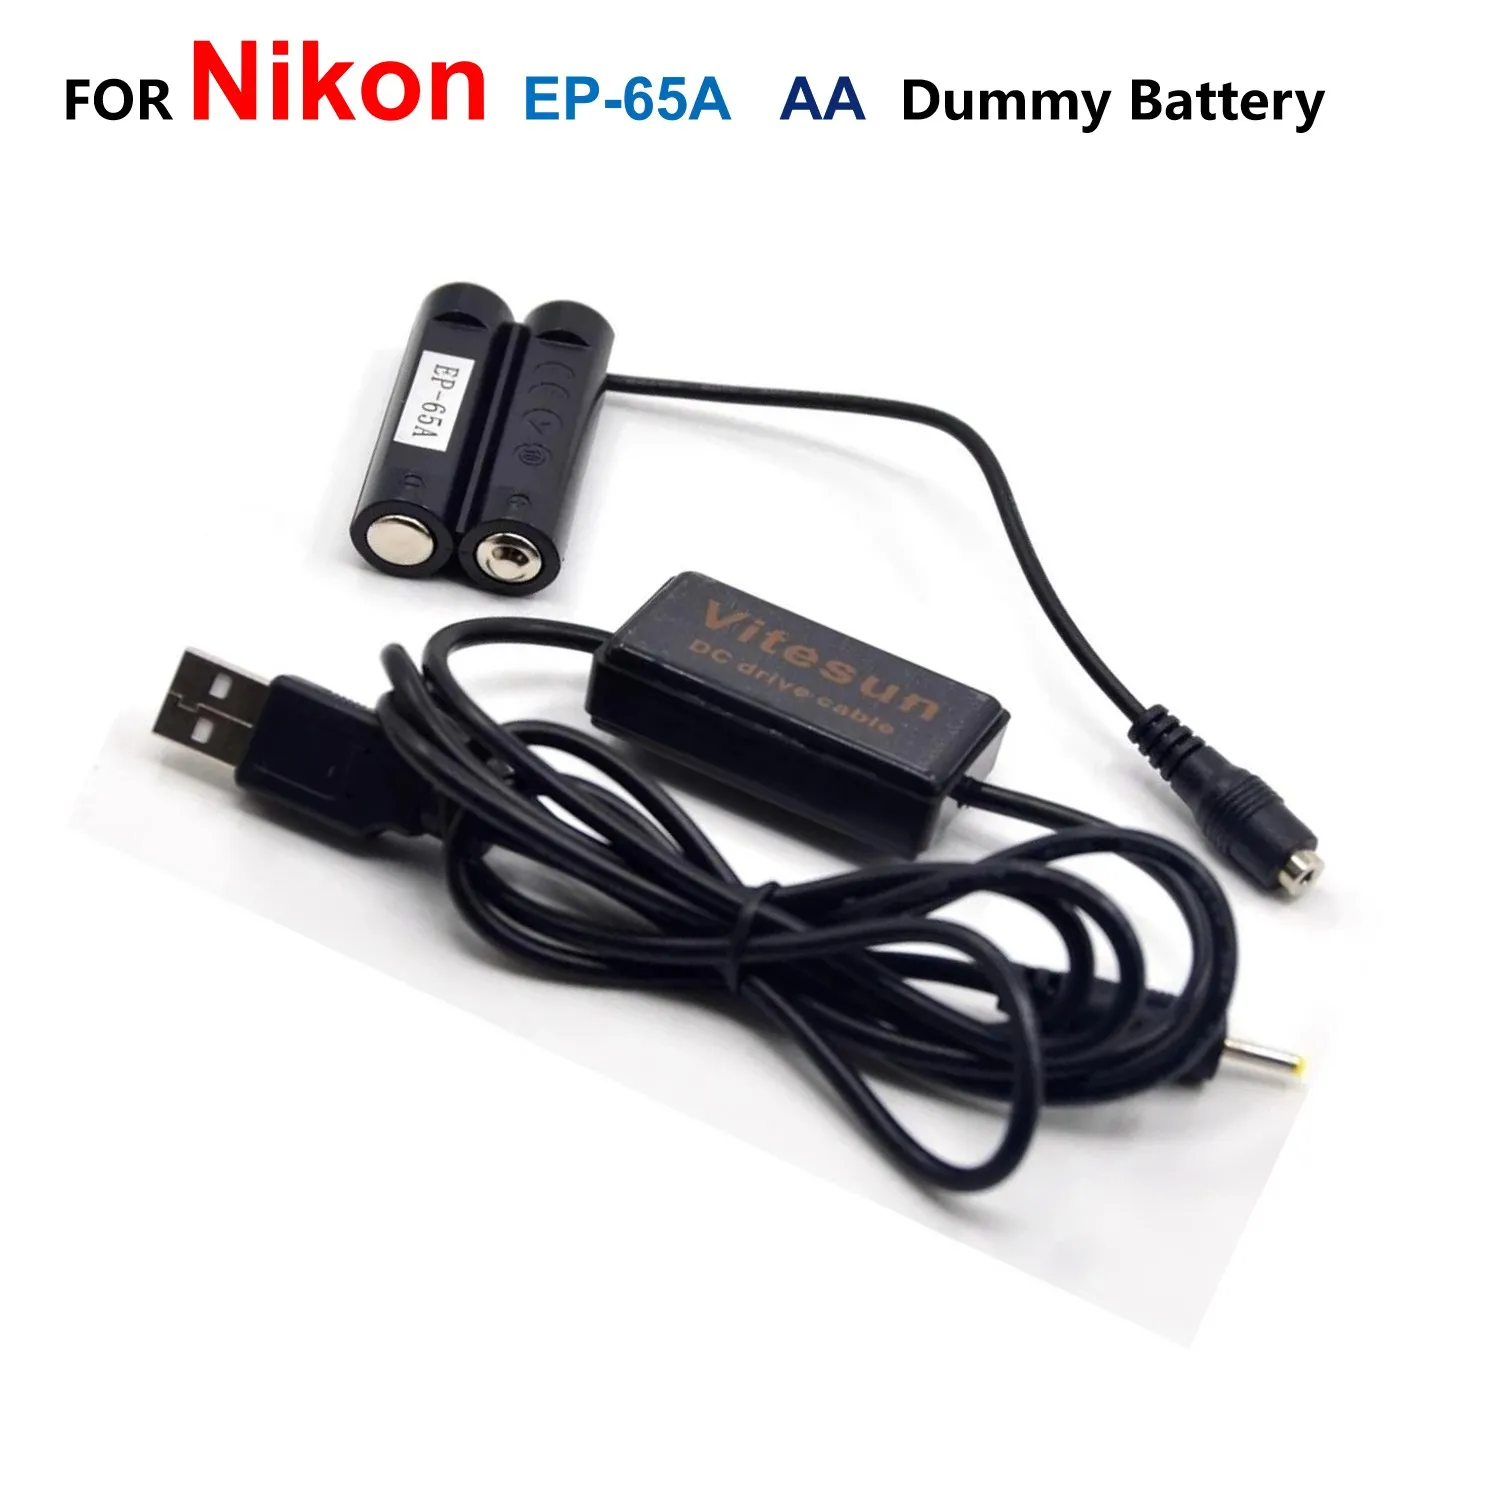 

EP-65A EP65A DC Coupler AA Dummy Battery + USB Drive Power Adapter Cable For Nikon P60 P50 L18 L16 L15 L14 L12 L11 L6 L5 L3